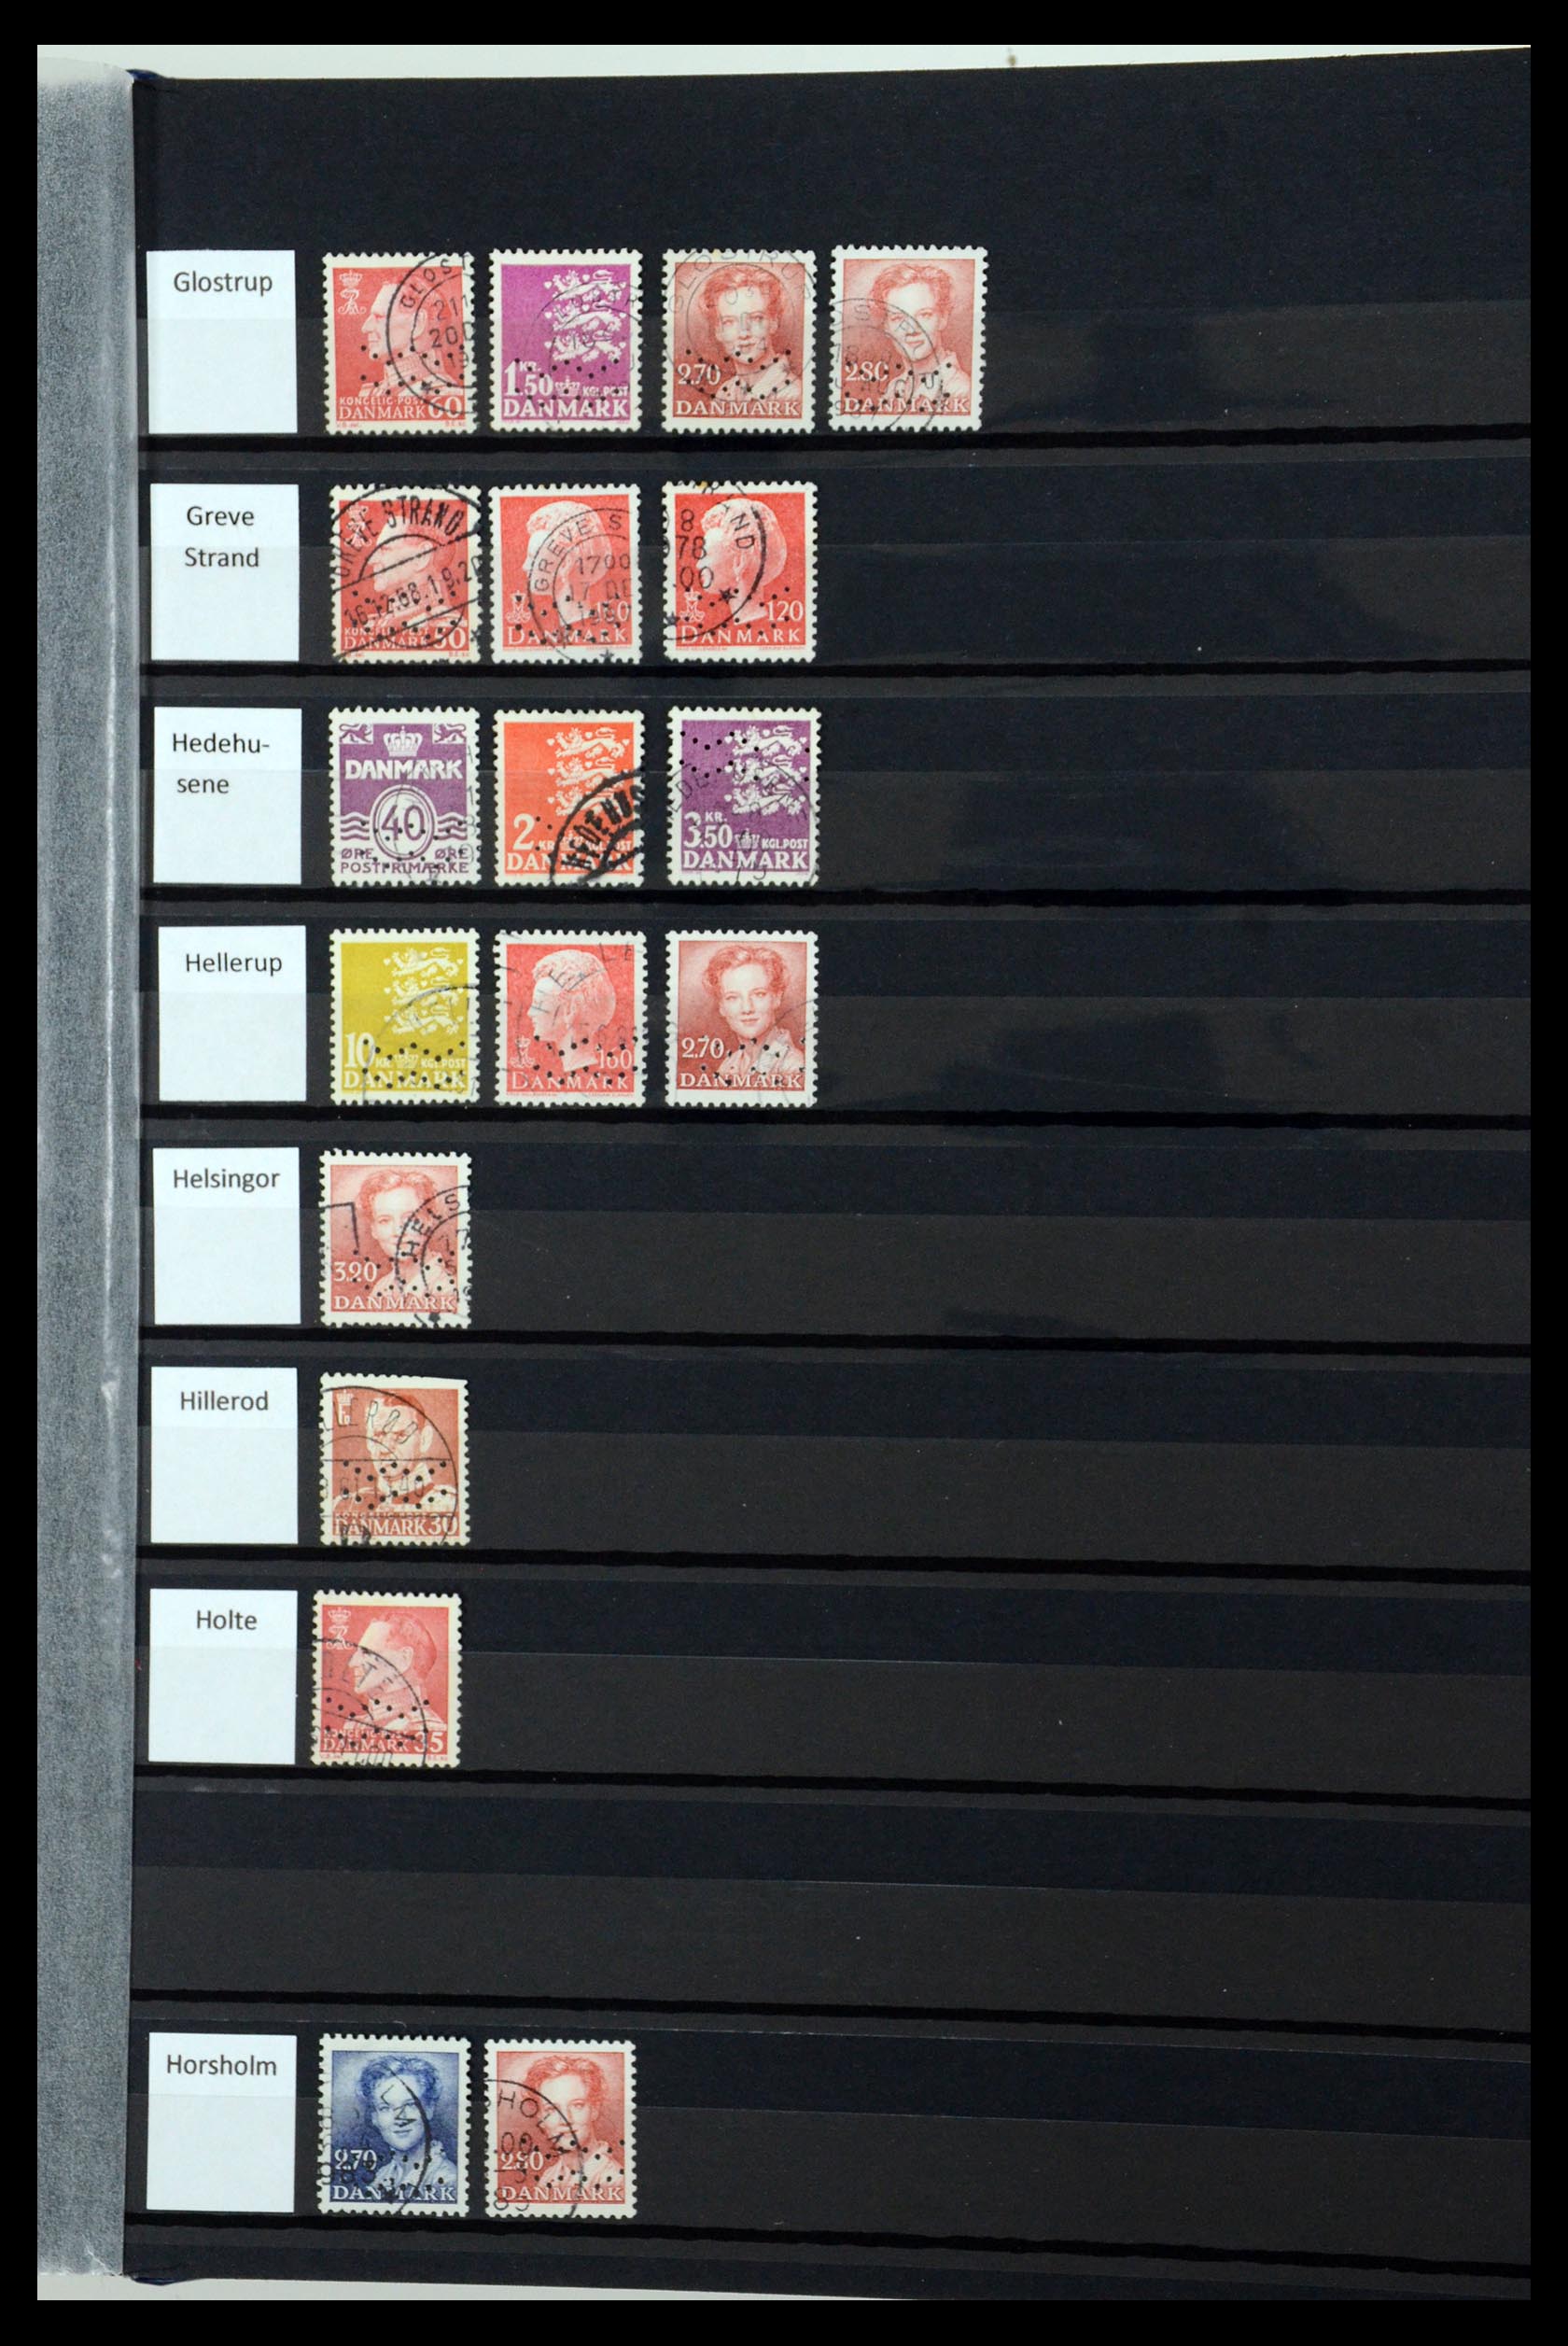 36396 114 - Stamp collection 36396 Denmark perfins.